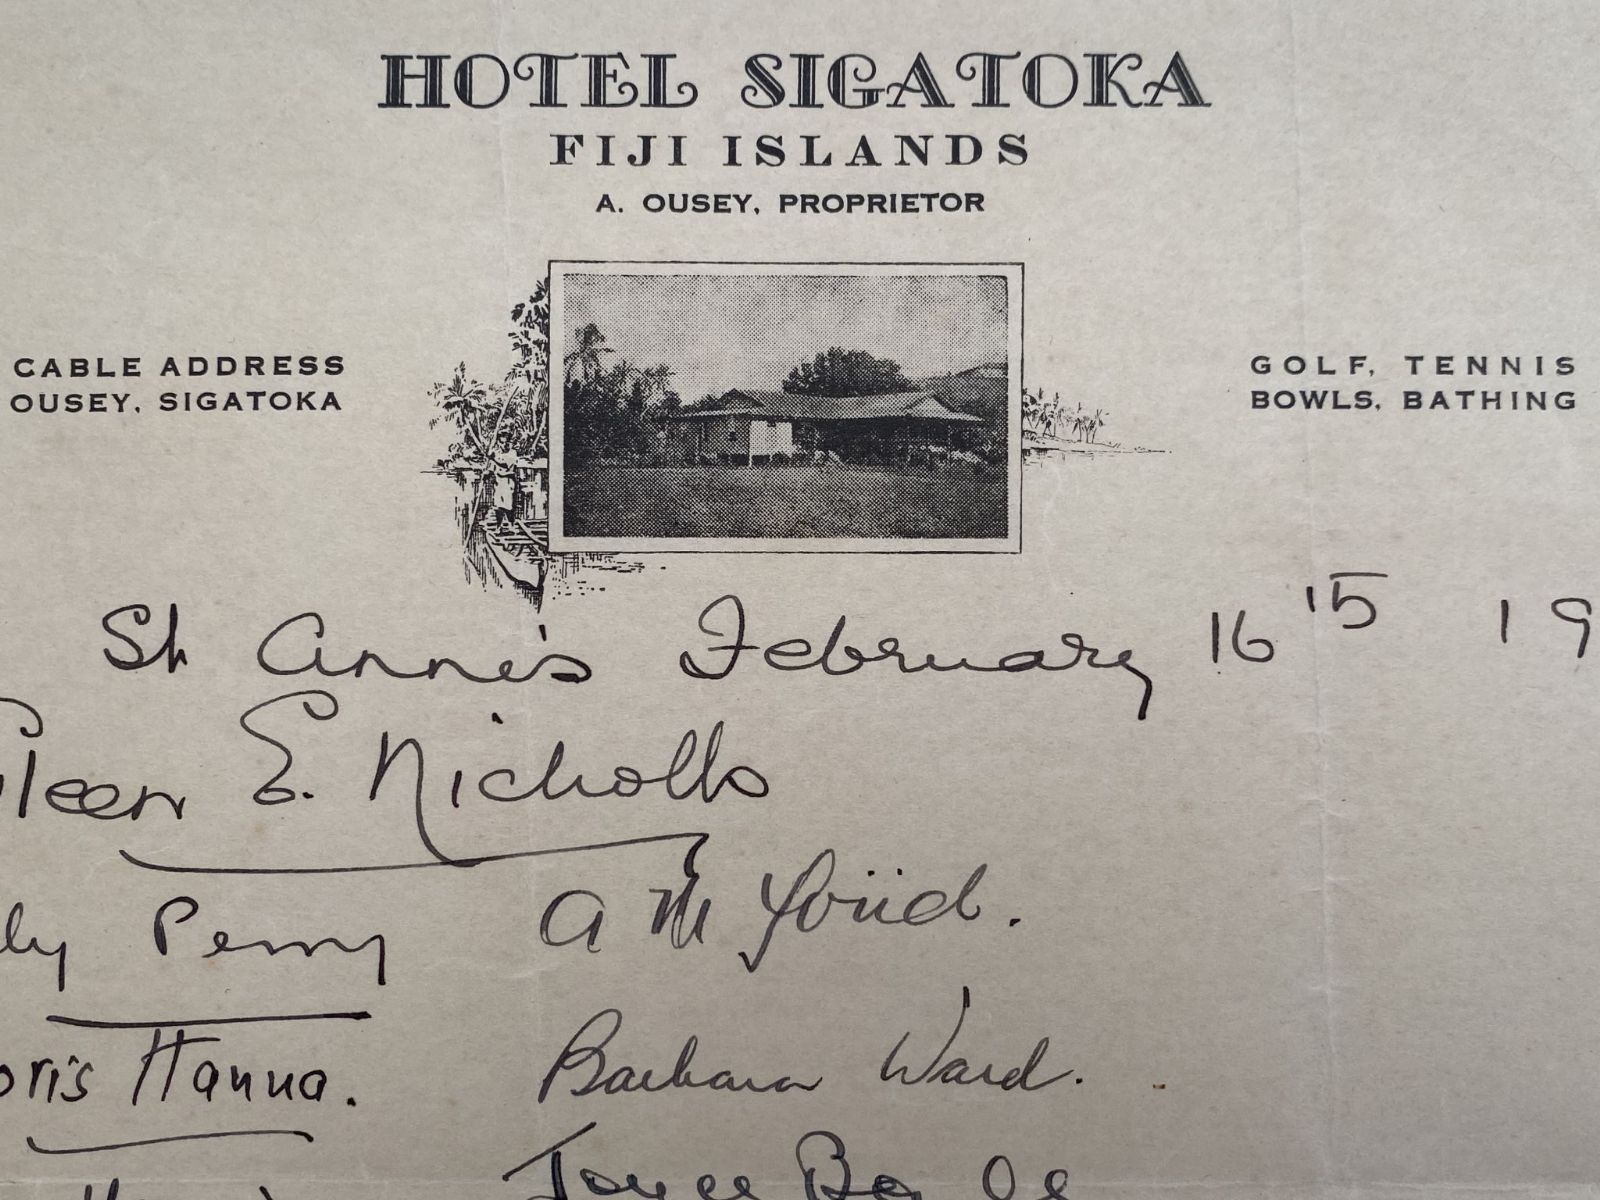 OLD LETTERHEAD: Hotel Sigatoka, Fiji Islands 1951